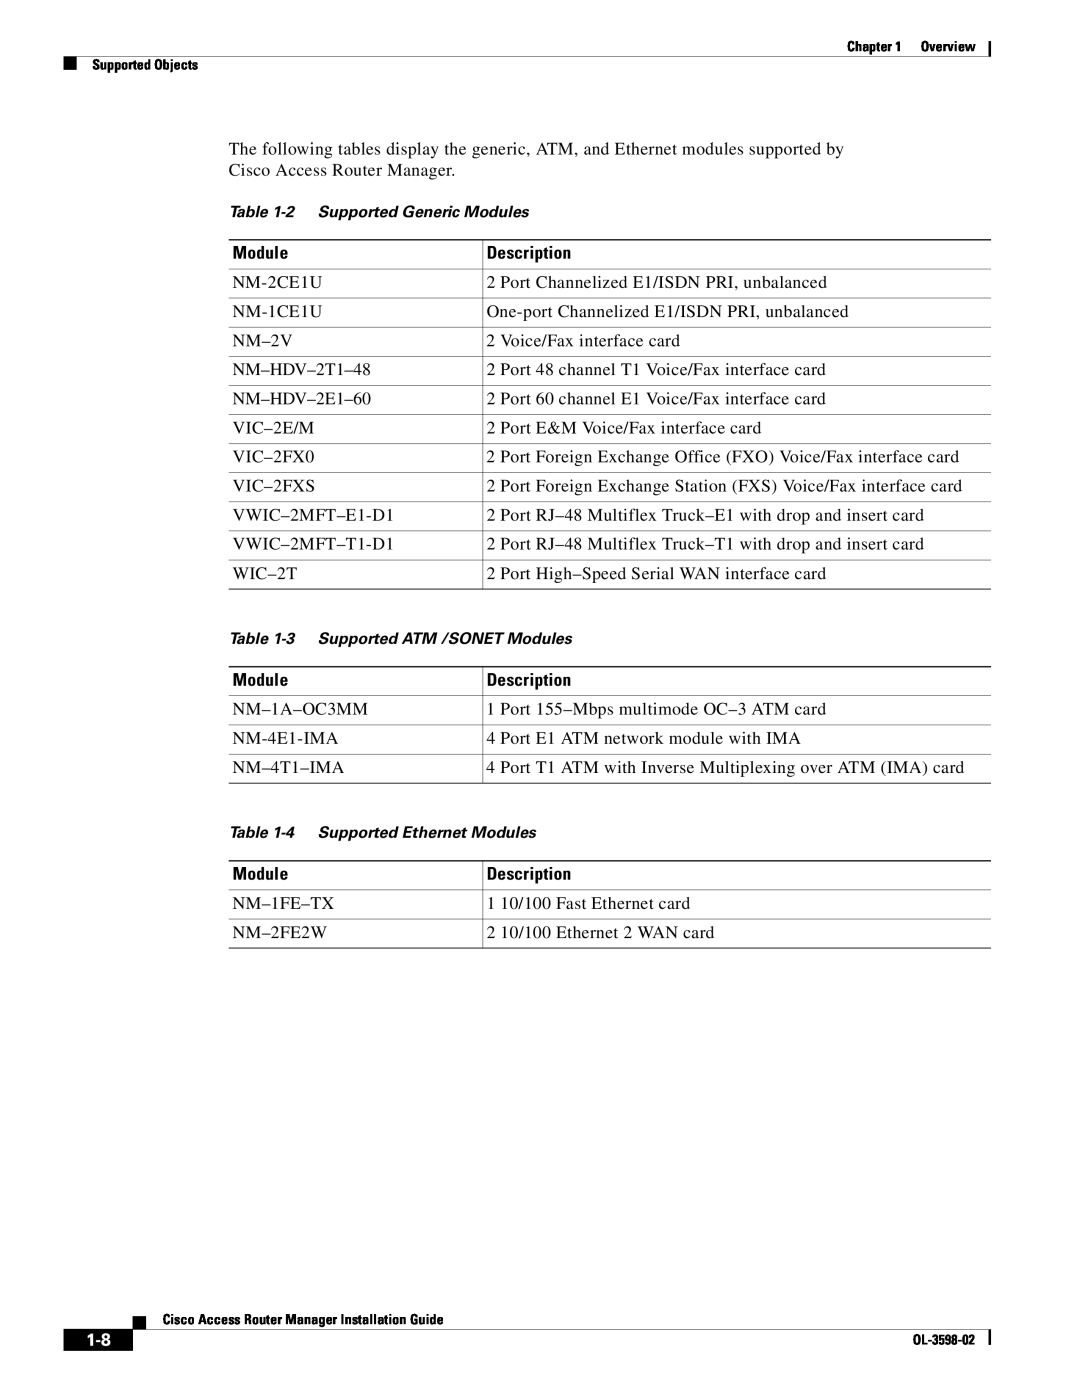 Cisco Systems OL-3598-02 manual Module, Description 